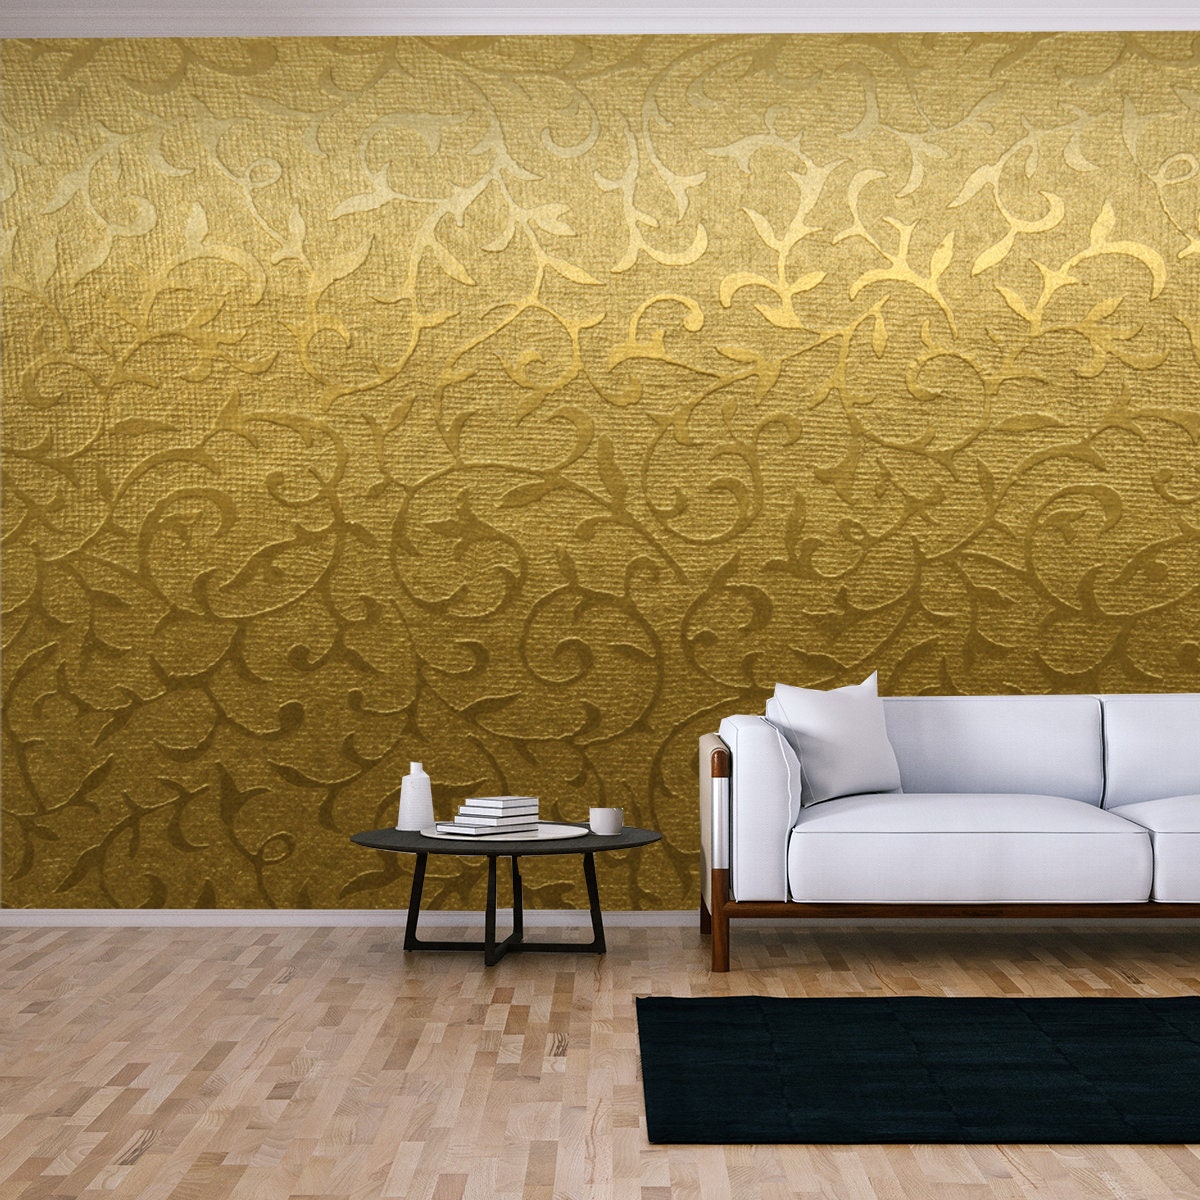 Golden Floral Ornament Brocade Textile Pattern Wallpaper Living Room Mural